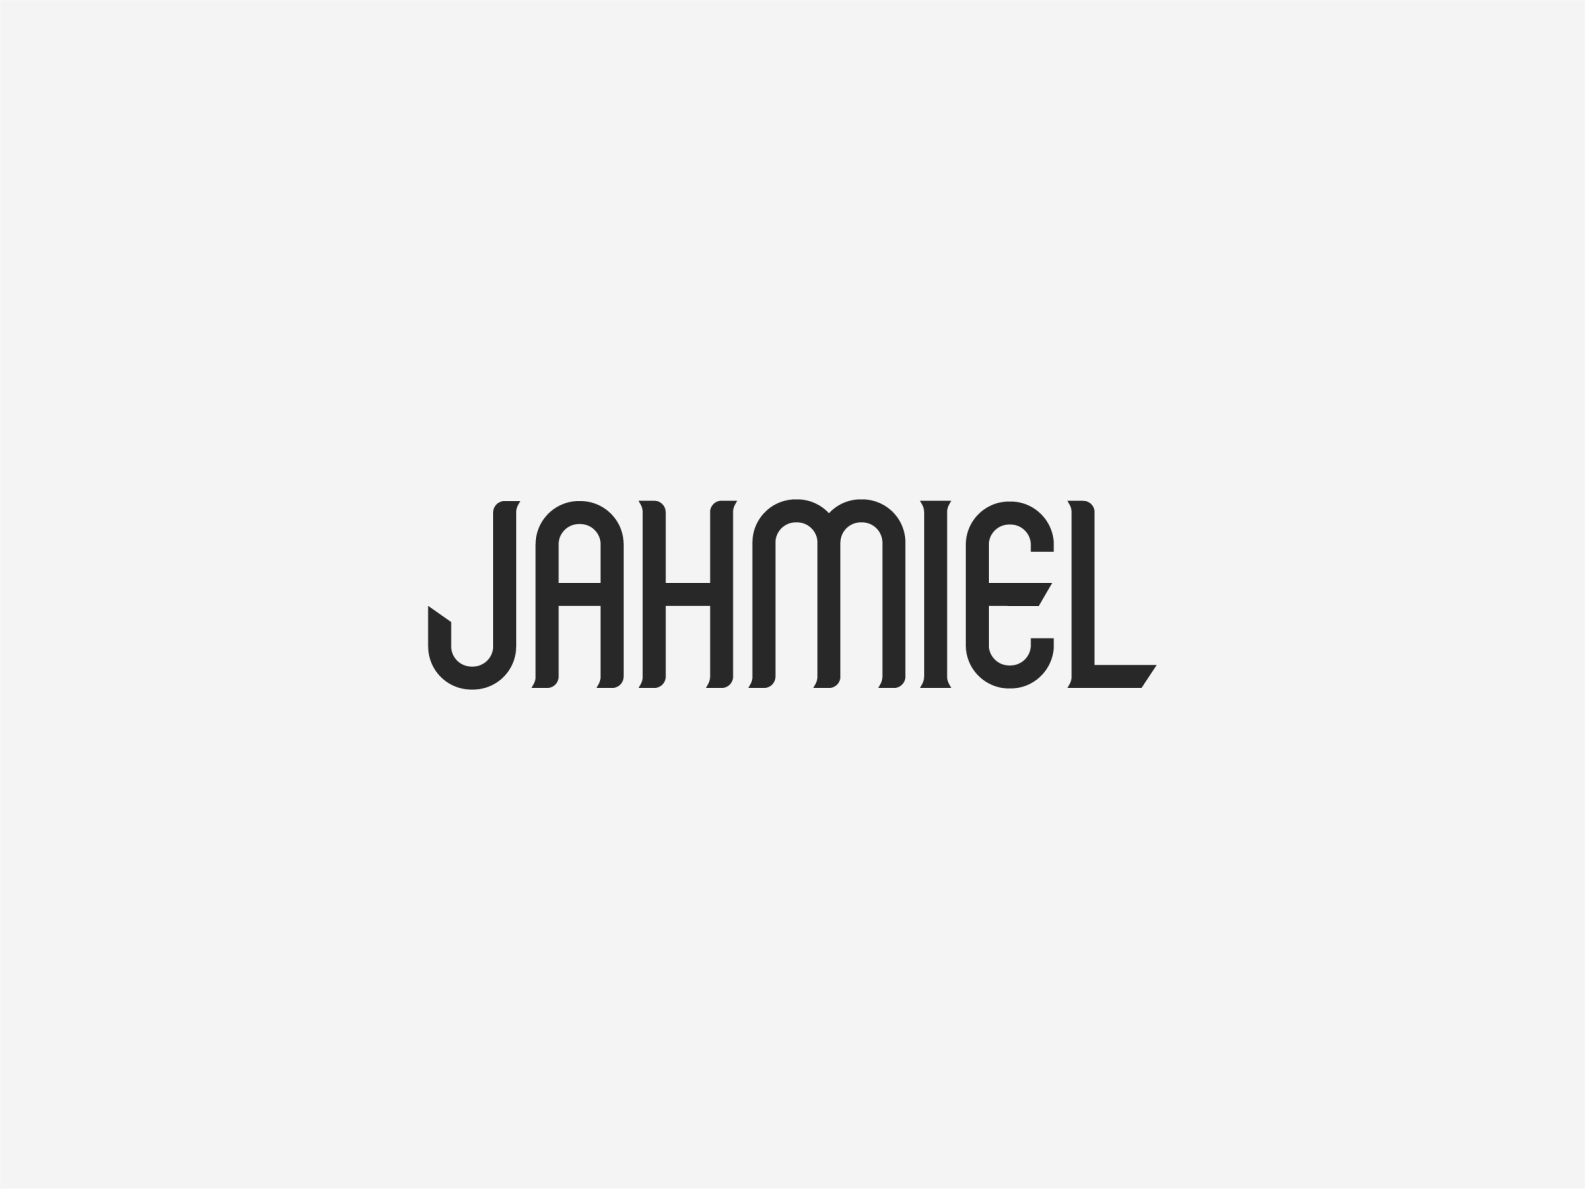 JAHMIEL- clothing brand logo by 10 DESIGN on Dribbble